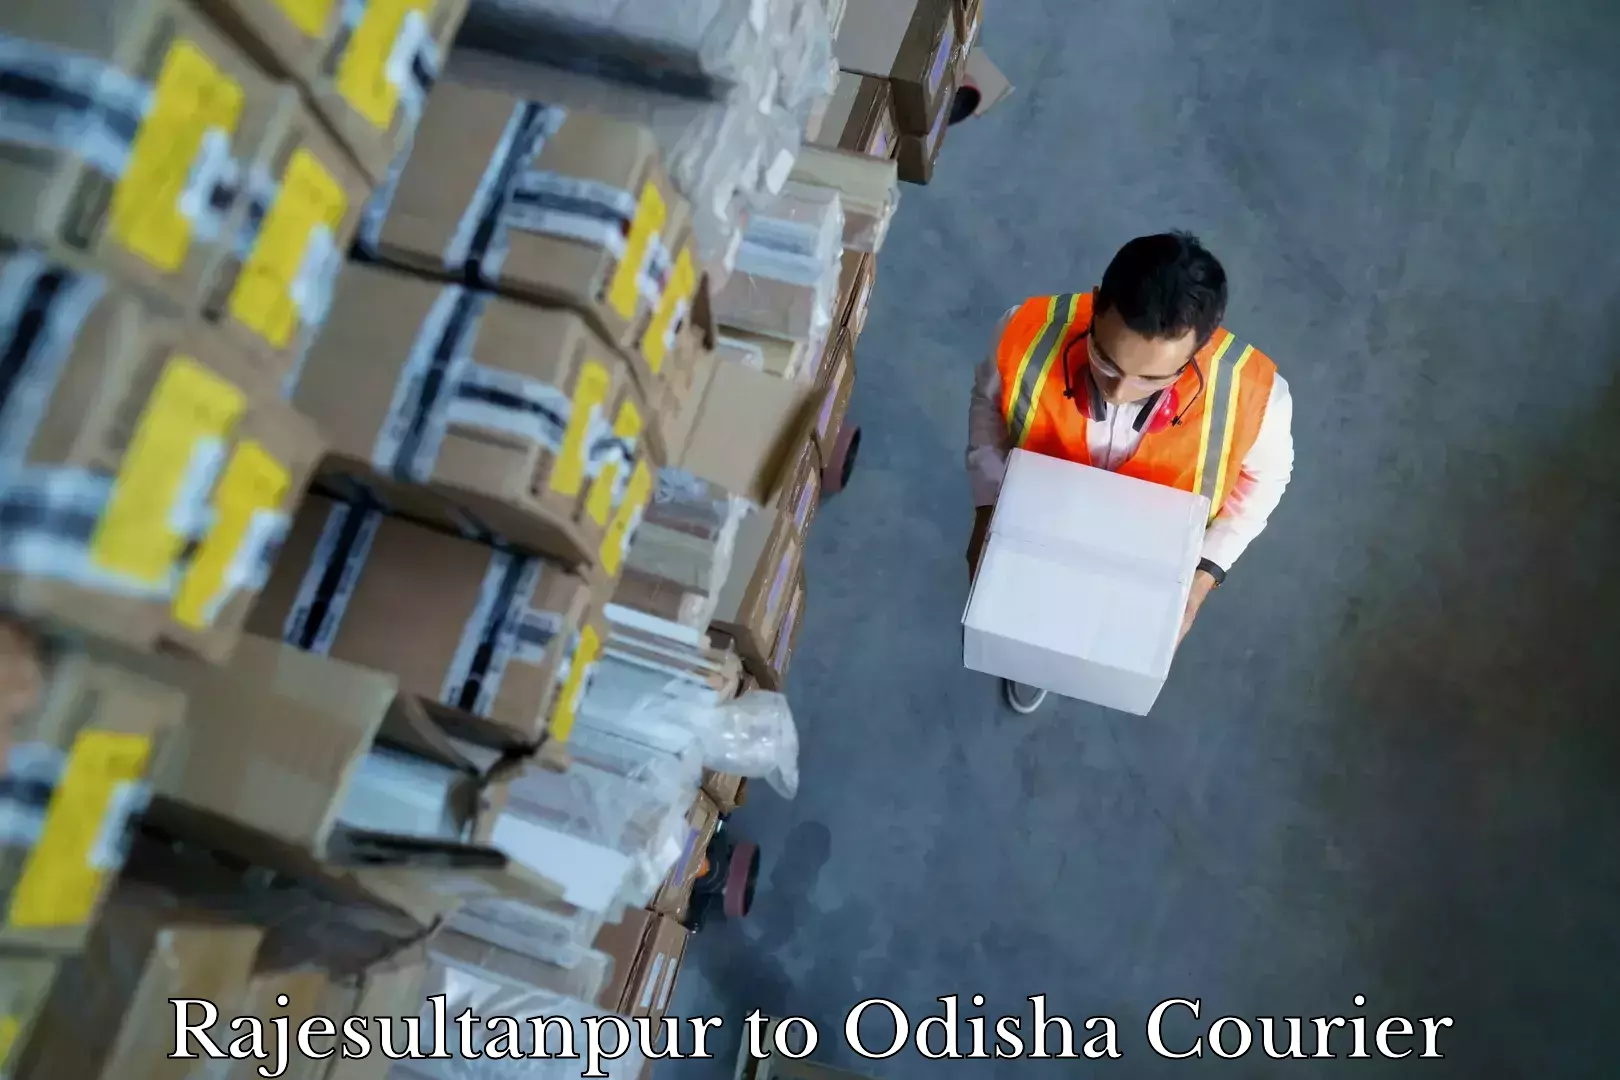 Seamless moving process Rajesultanpur to Odisha